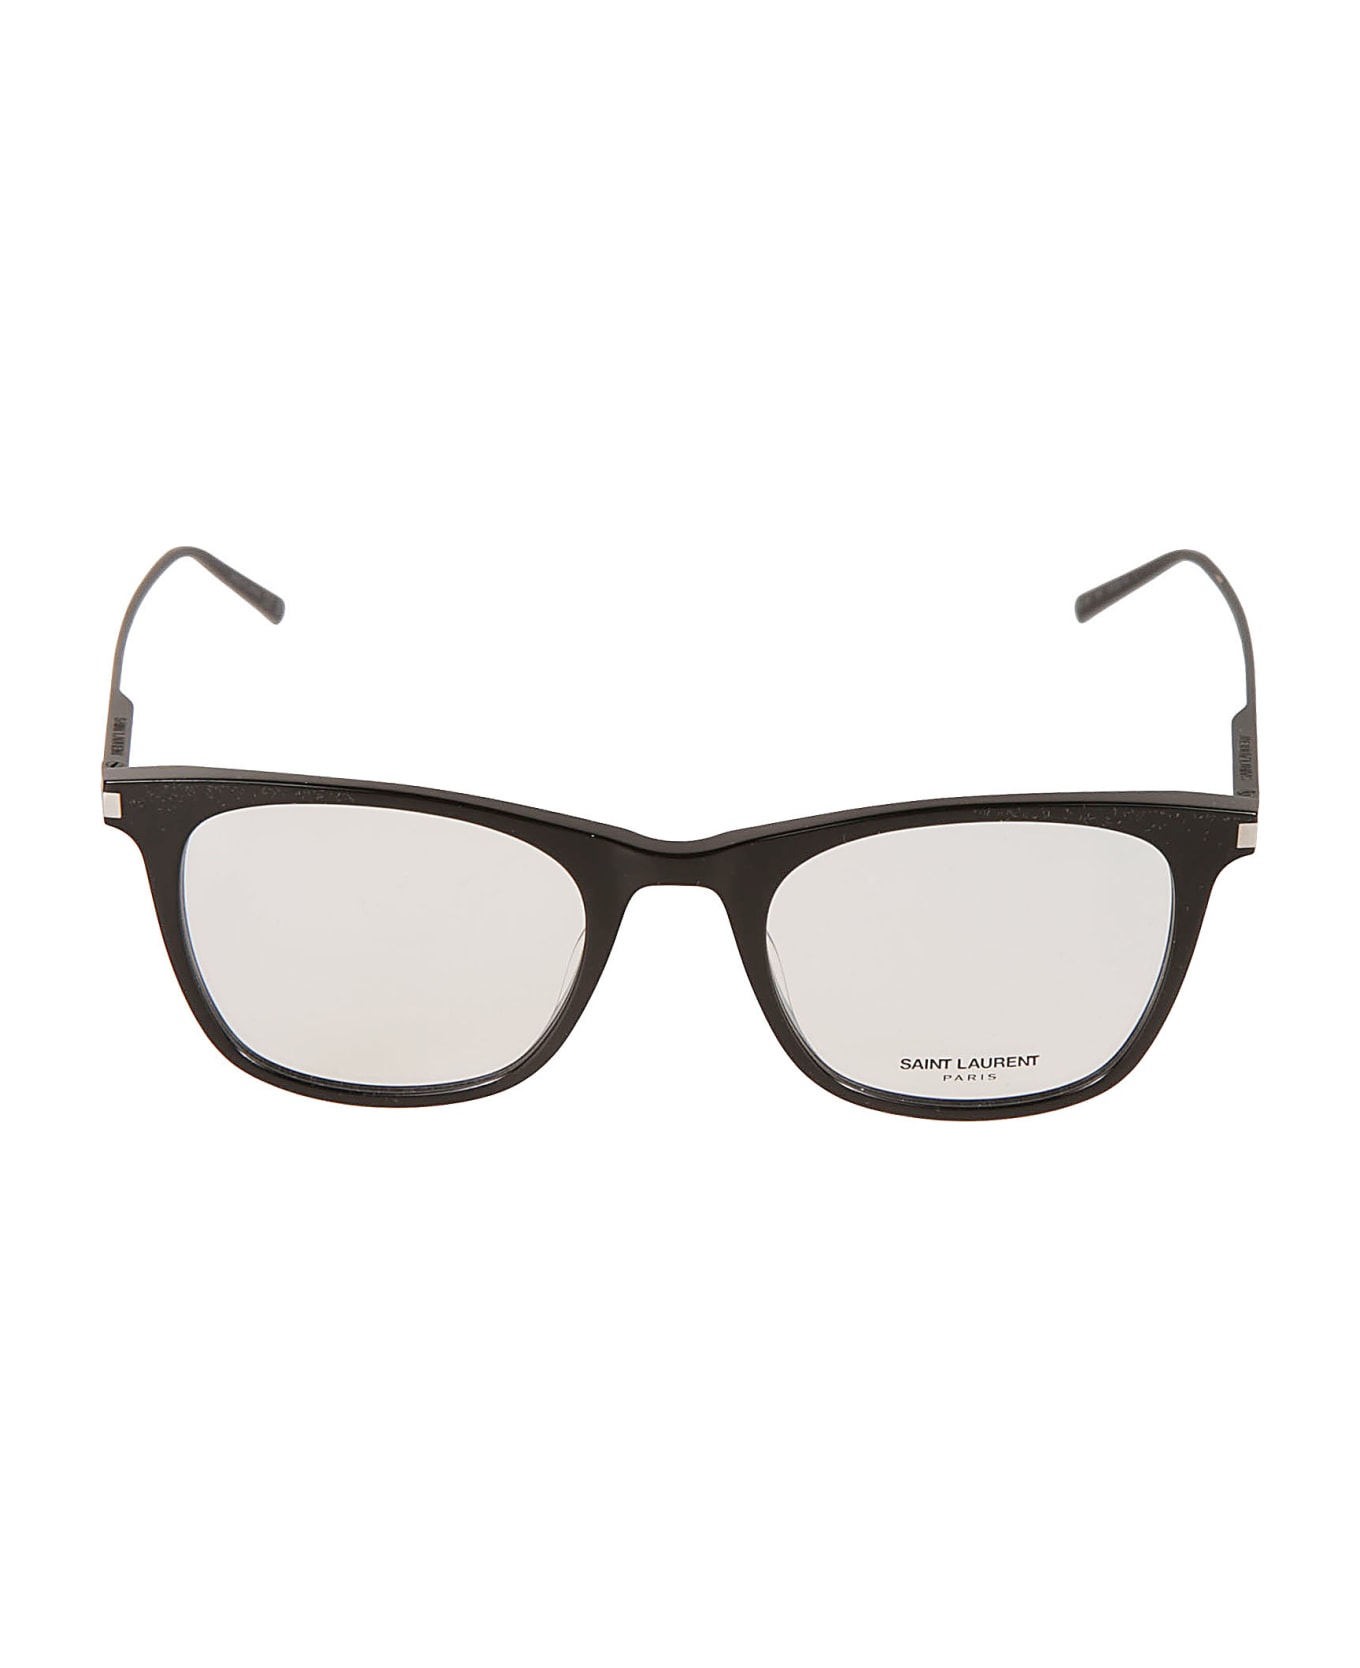 Saint Laurent Eyewear Logo Wayfarer Frame - Black